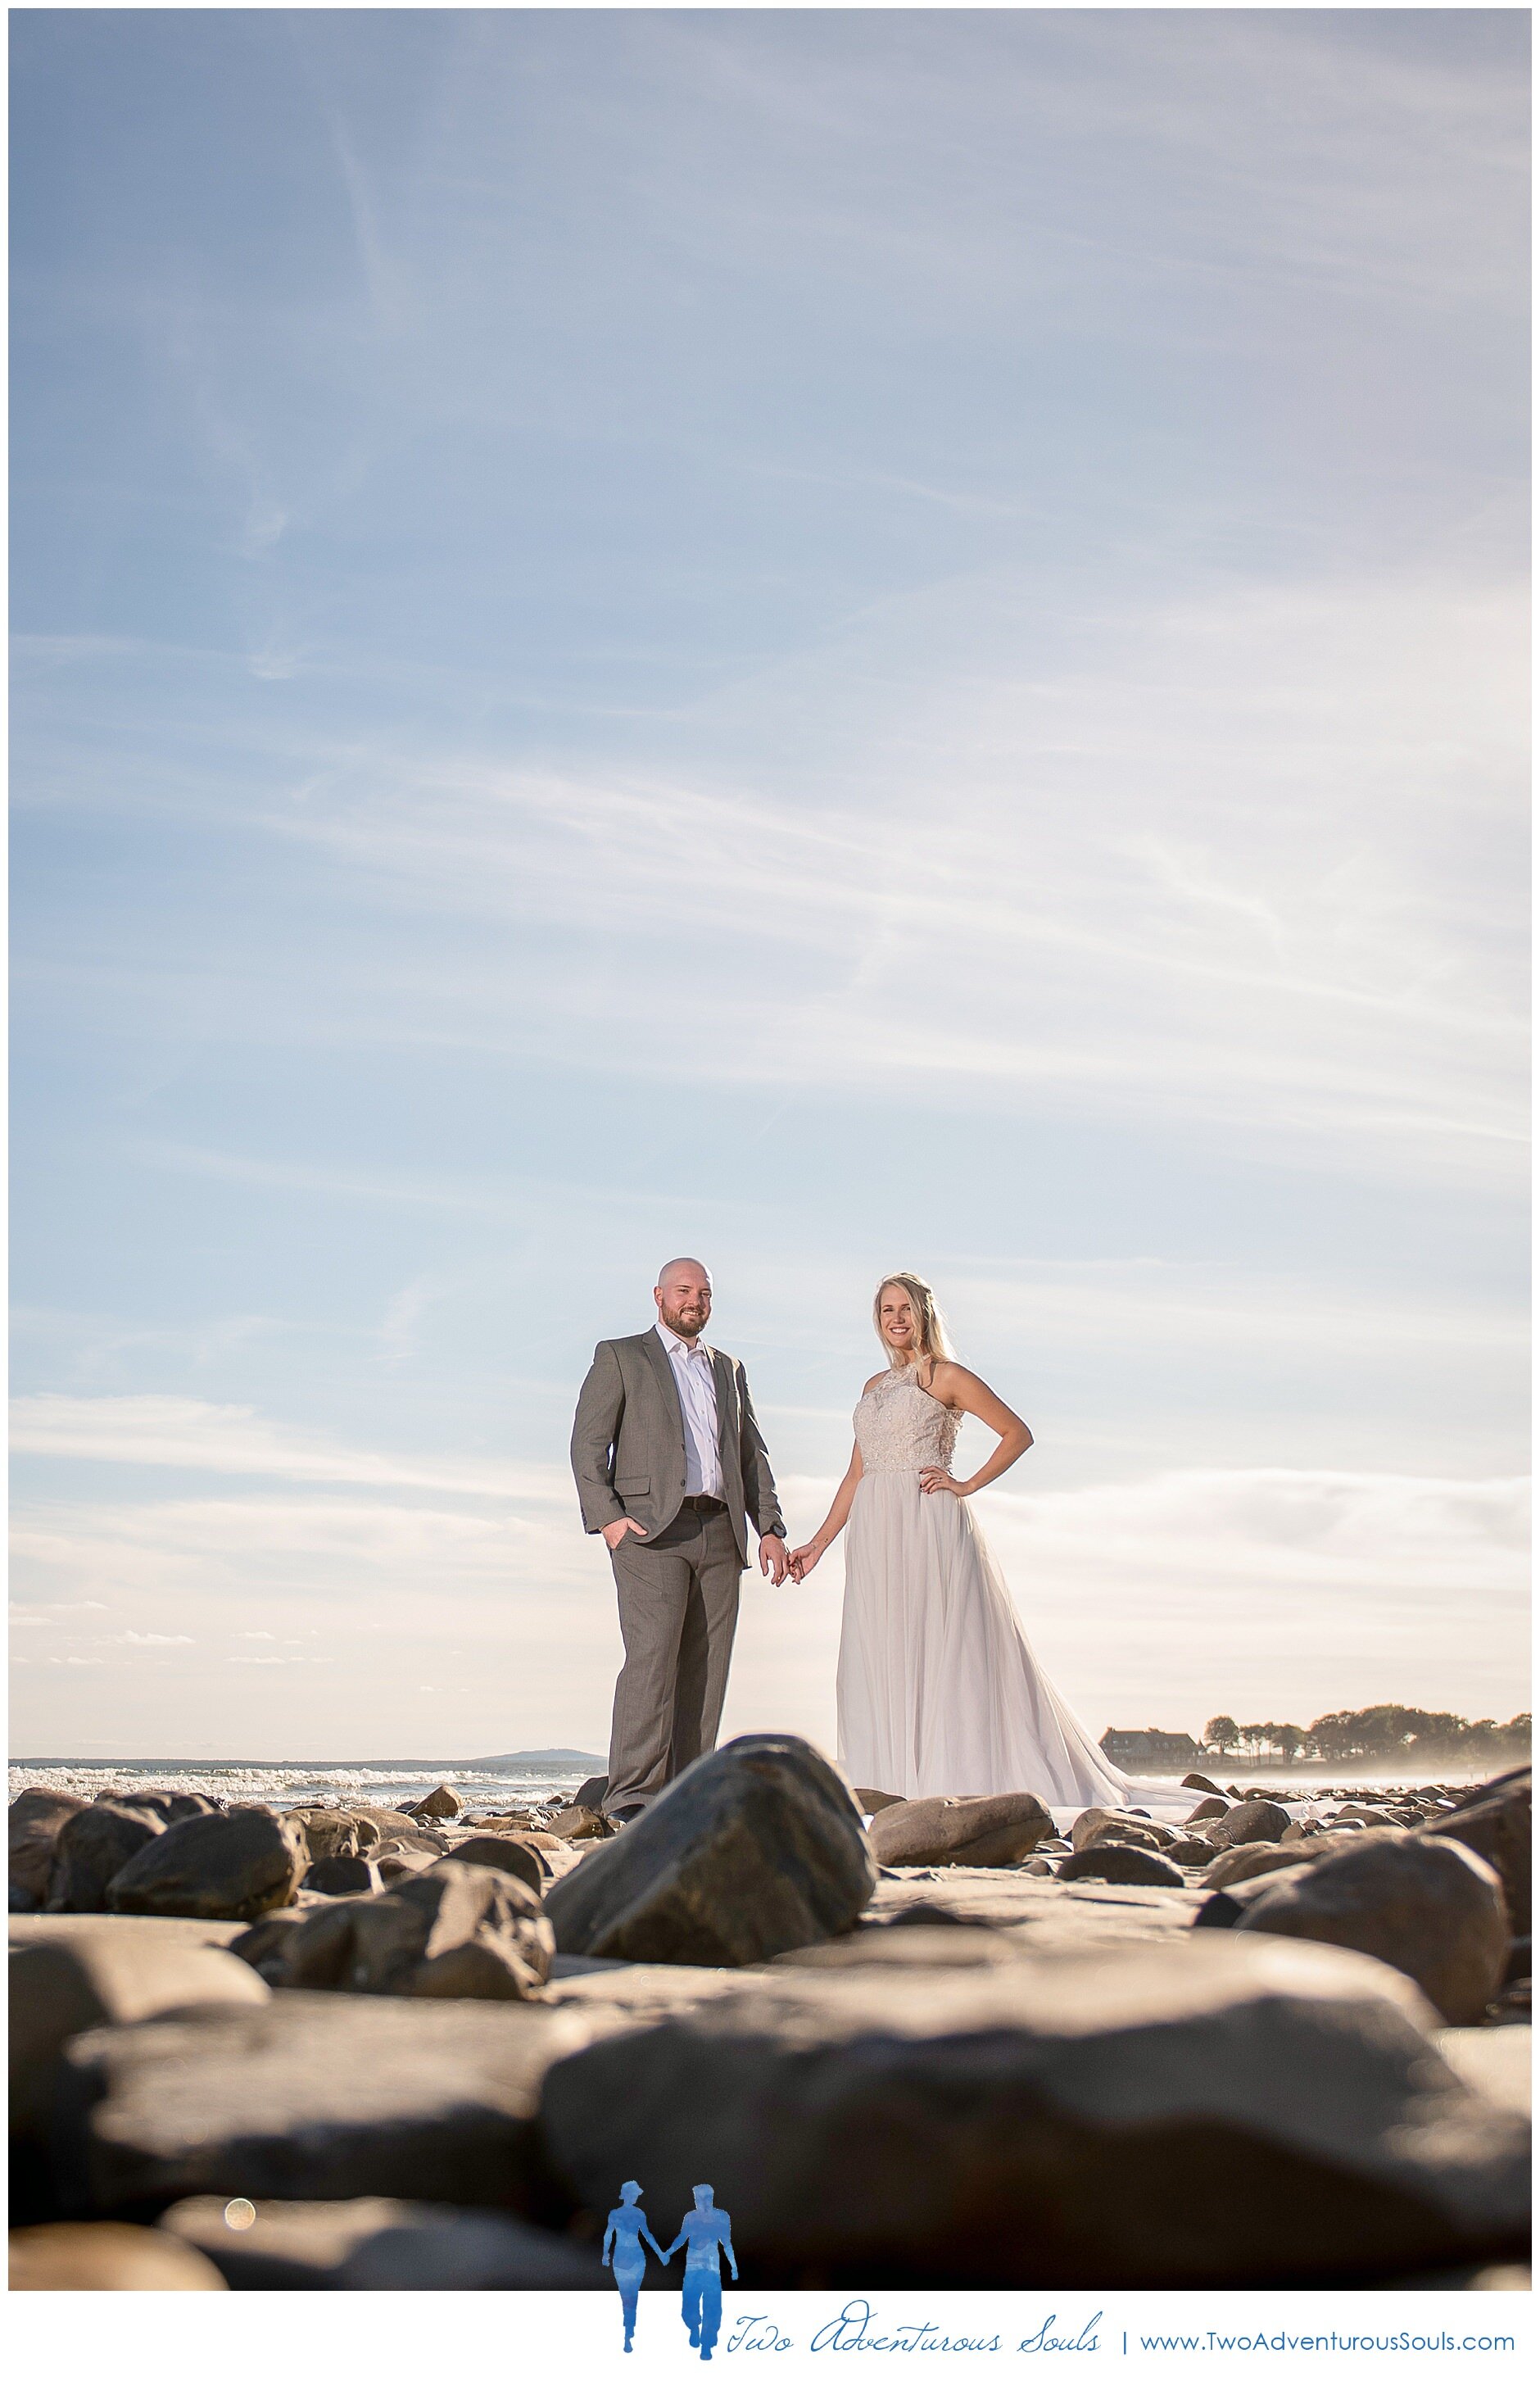 Parson's Beach Wedding Photos, Kennebunkport Maine Wedding Photographers, Two Adventurous Souls - 091220_0010.jpg